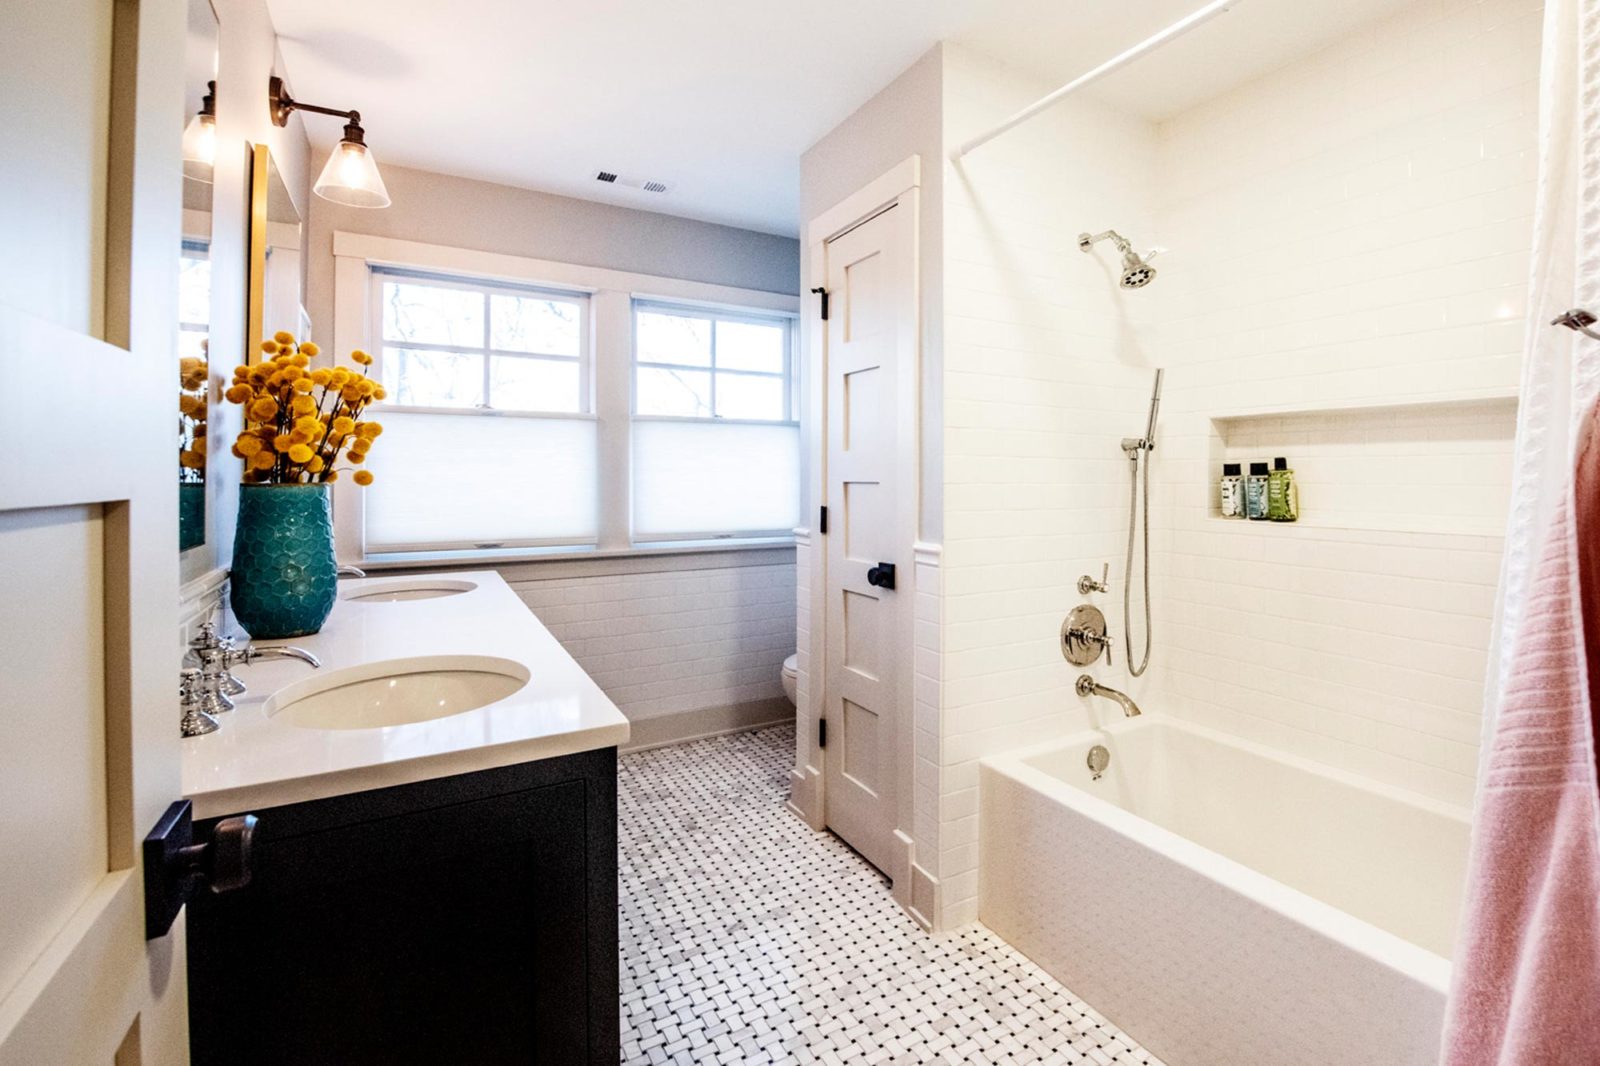 livco bathroom remodel tile flooring white walls and doors double sink vanity double mirrors